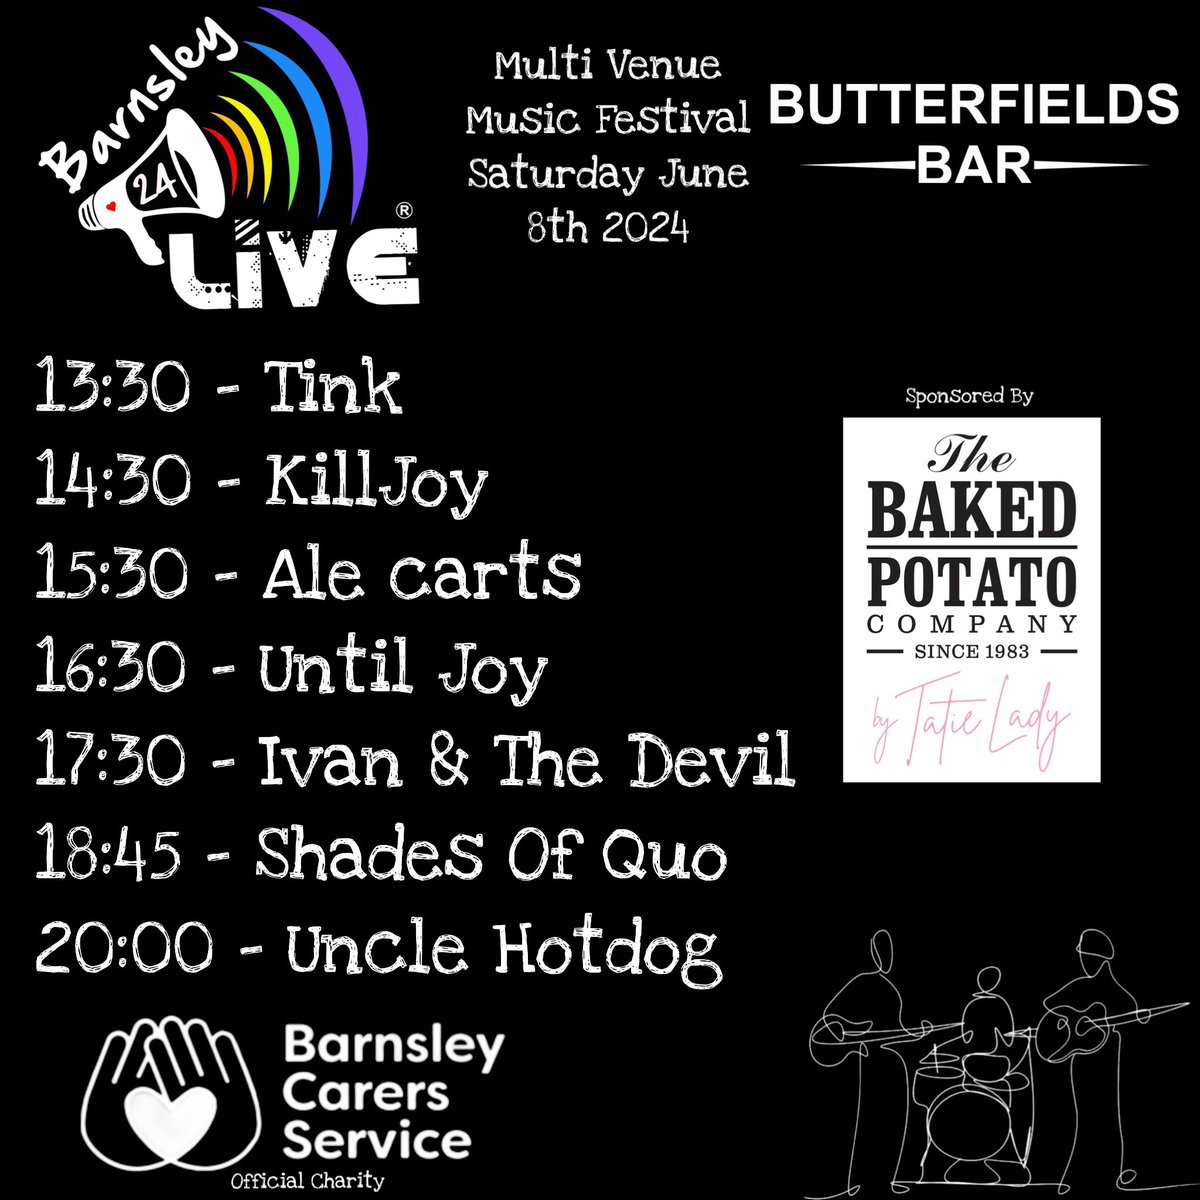 Barnsley Live 2024 - Butterfield's Bar line up! 🎉